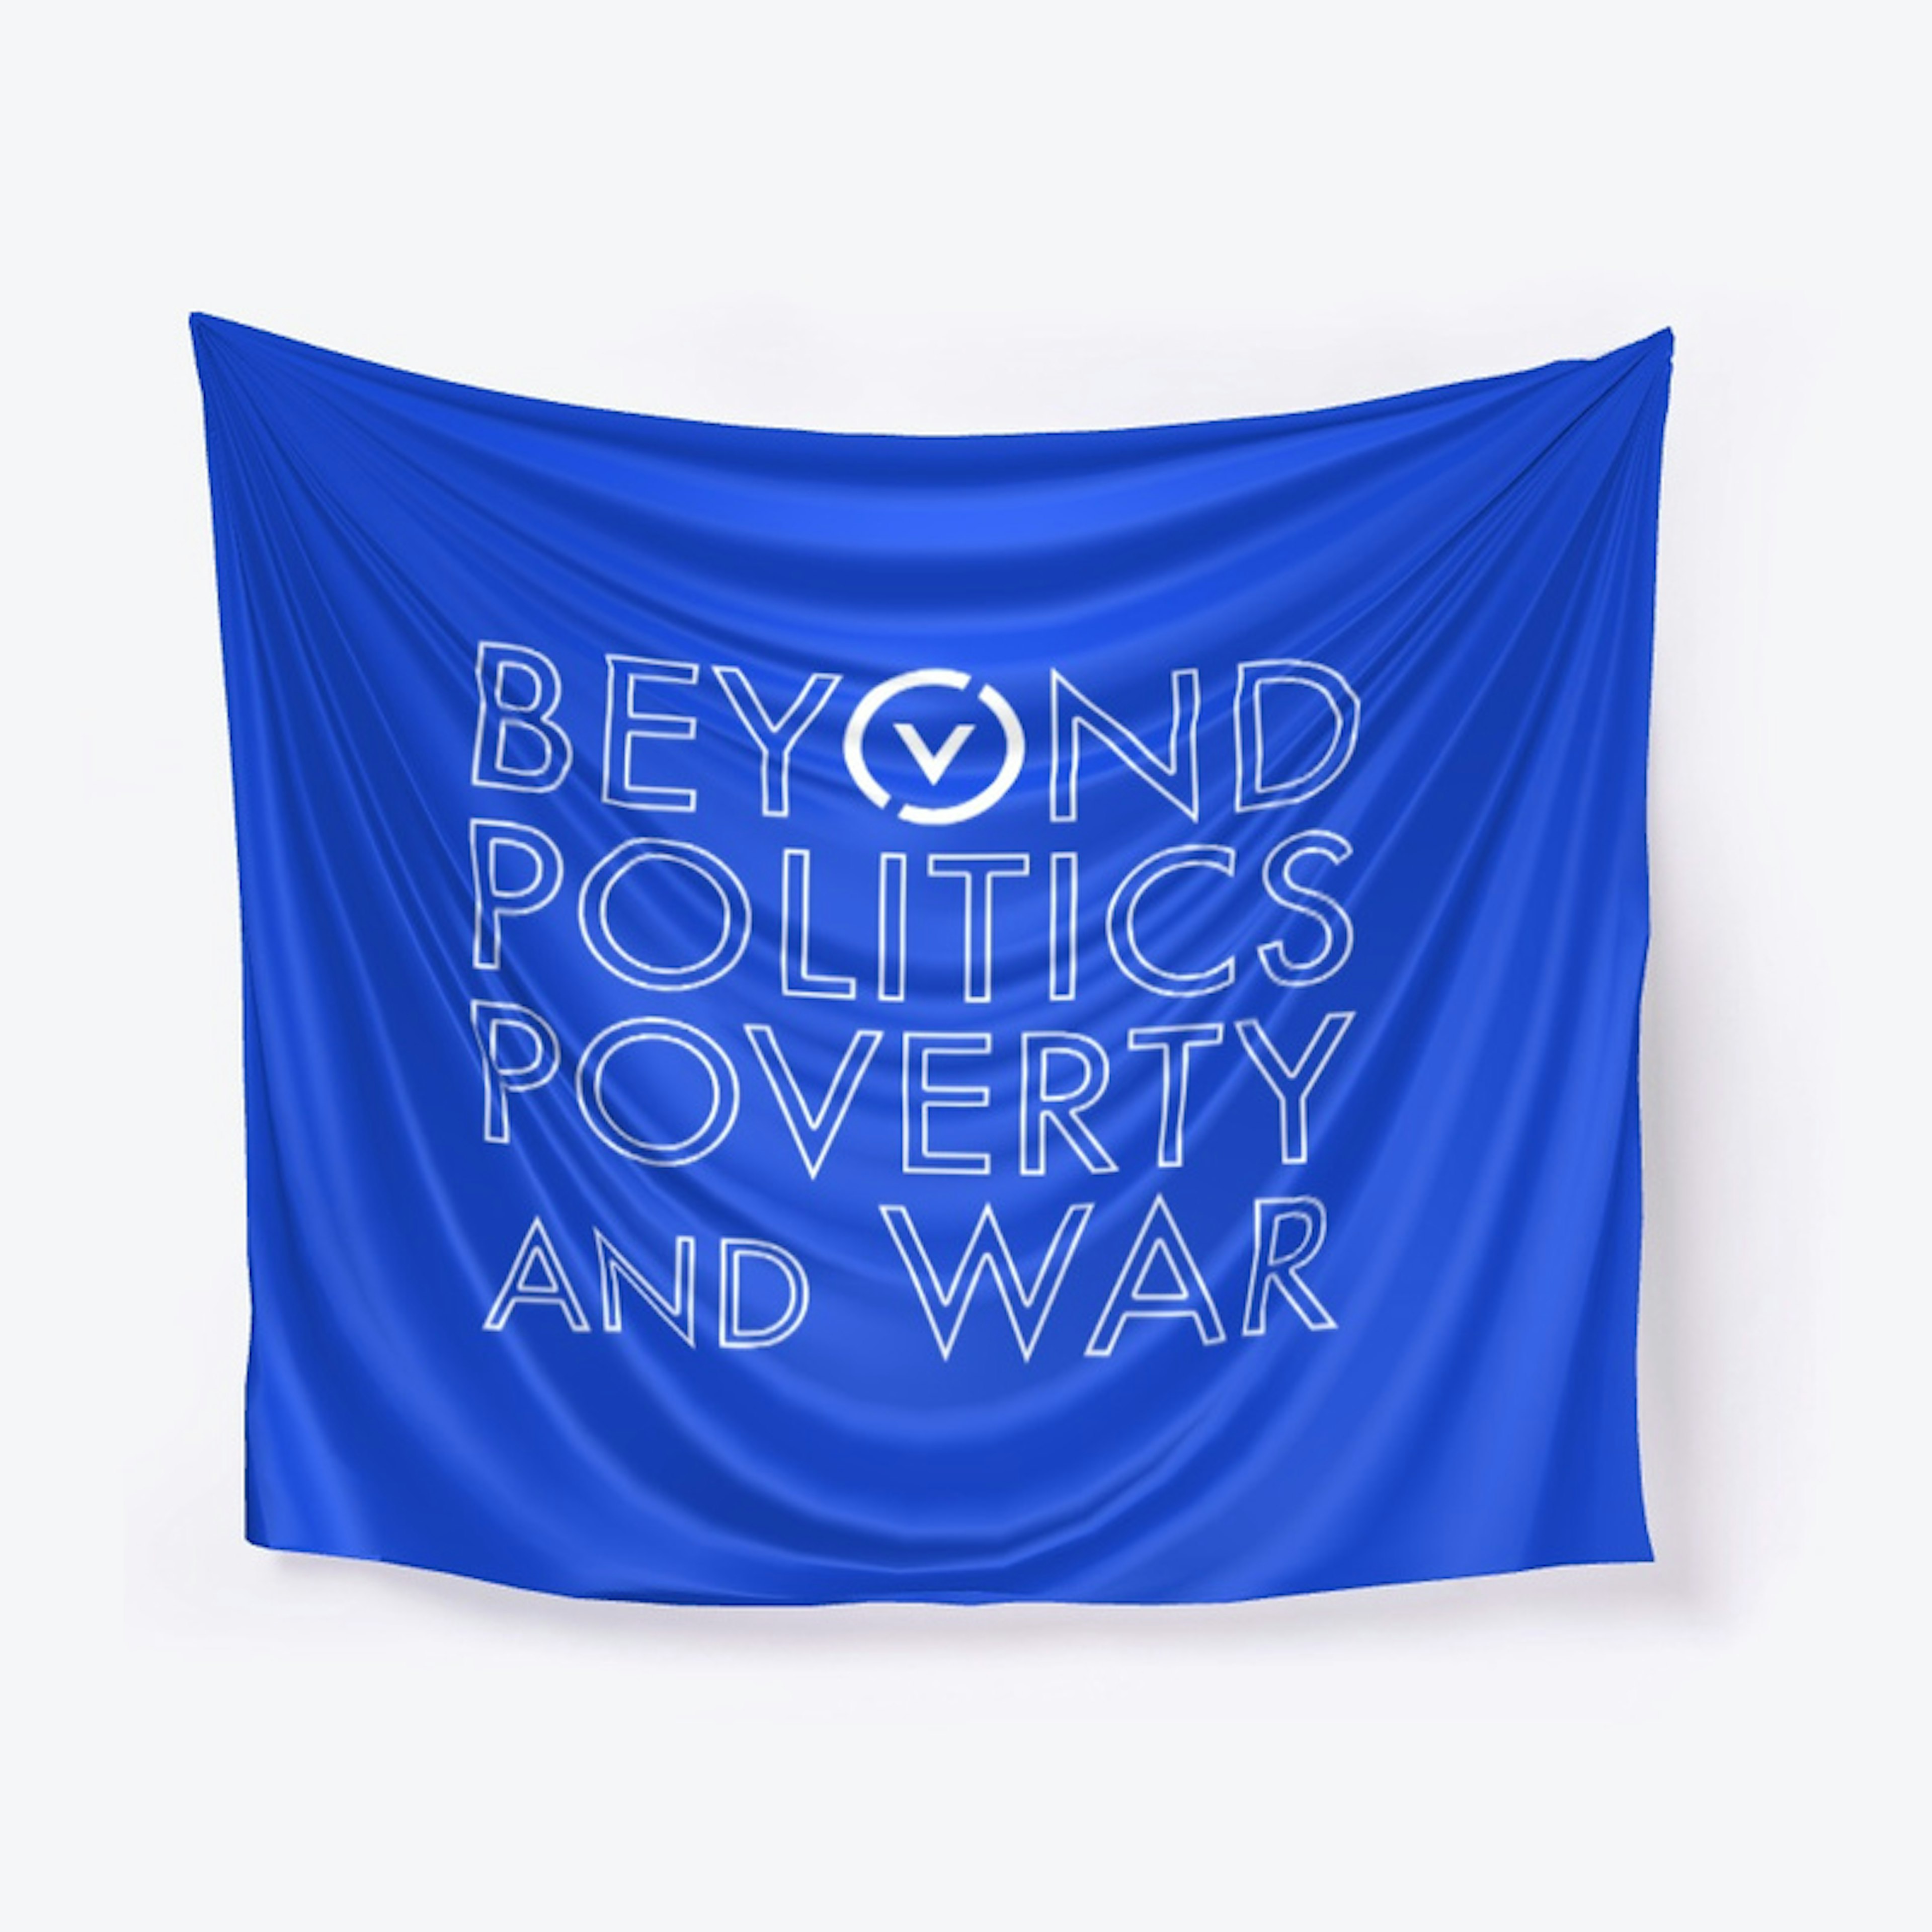 Beyond Politics Poverty War - BC - SP1